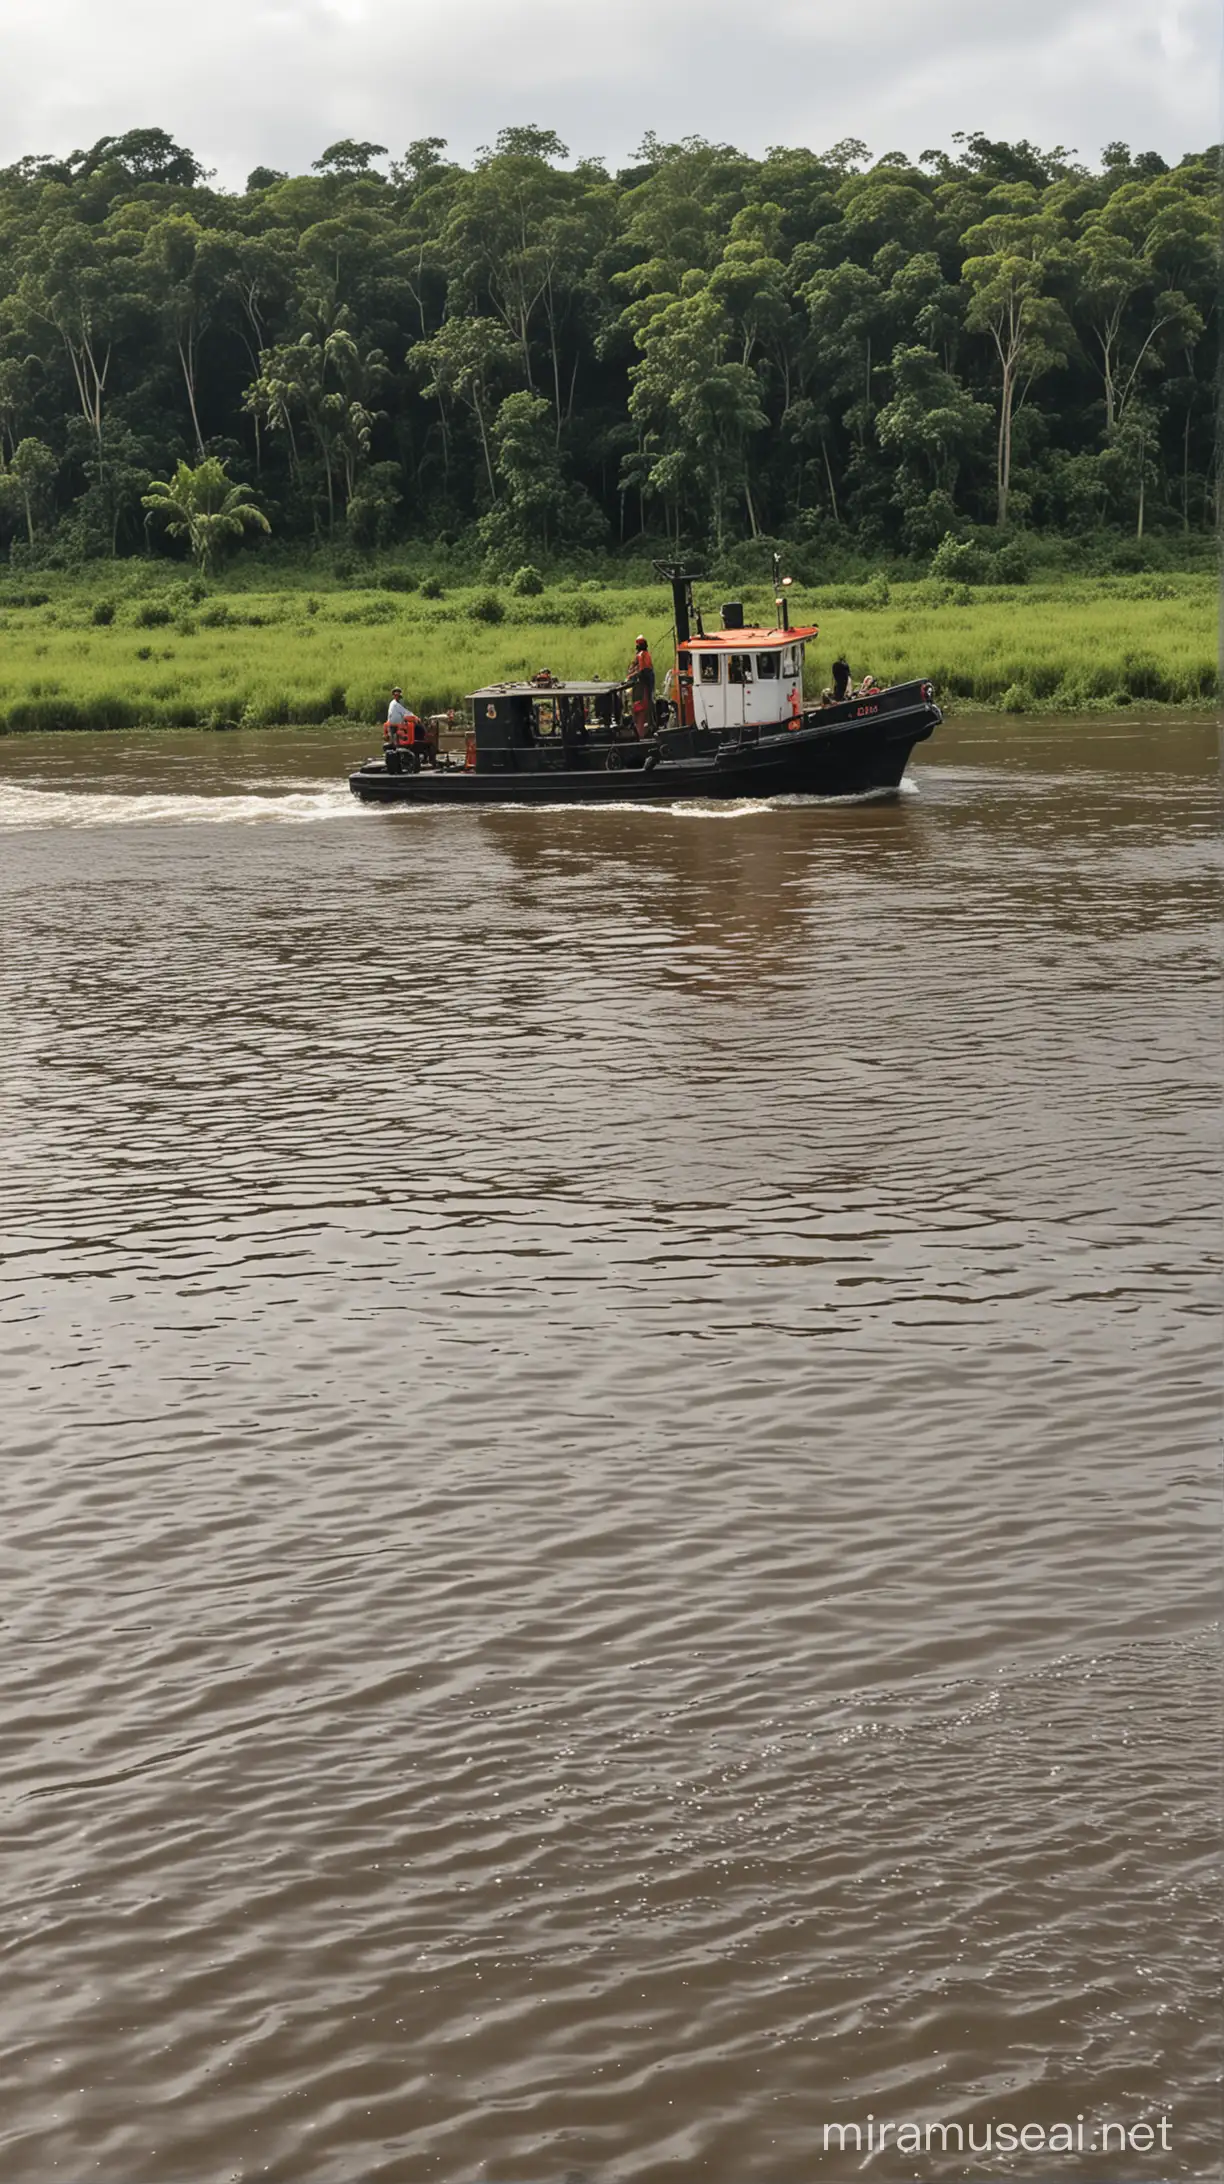 Tugboat on the Amazon River Elephant Drinking